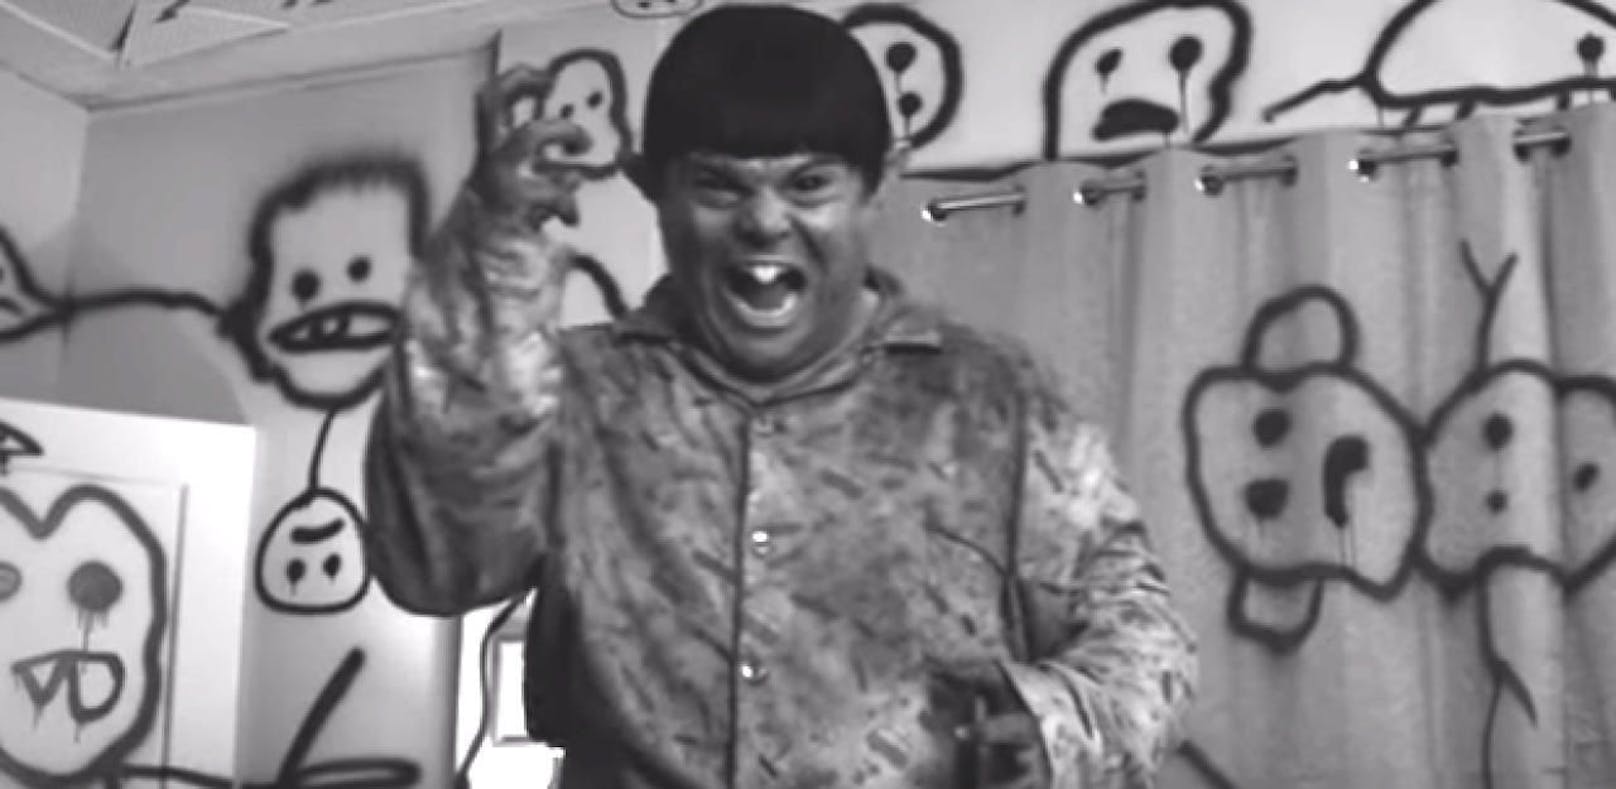 Jack Black als Rattenjunge in "Die Antwoord"-Video